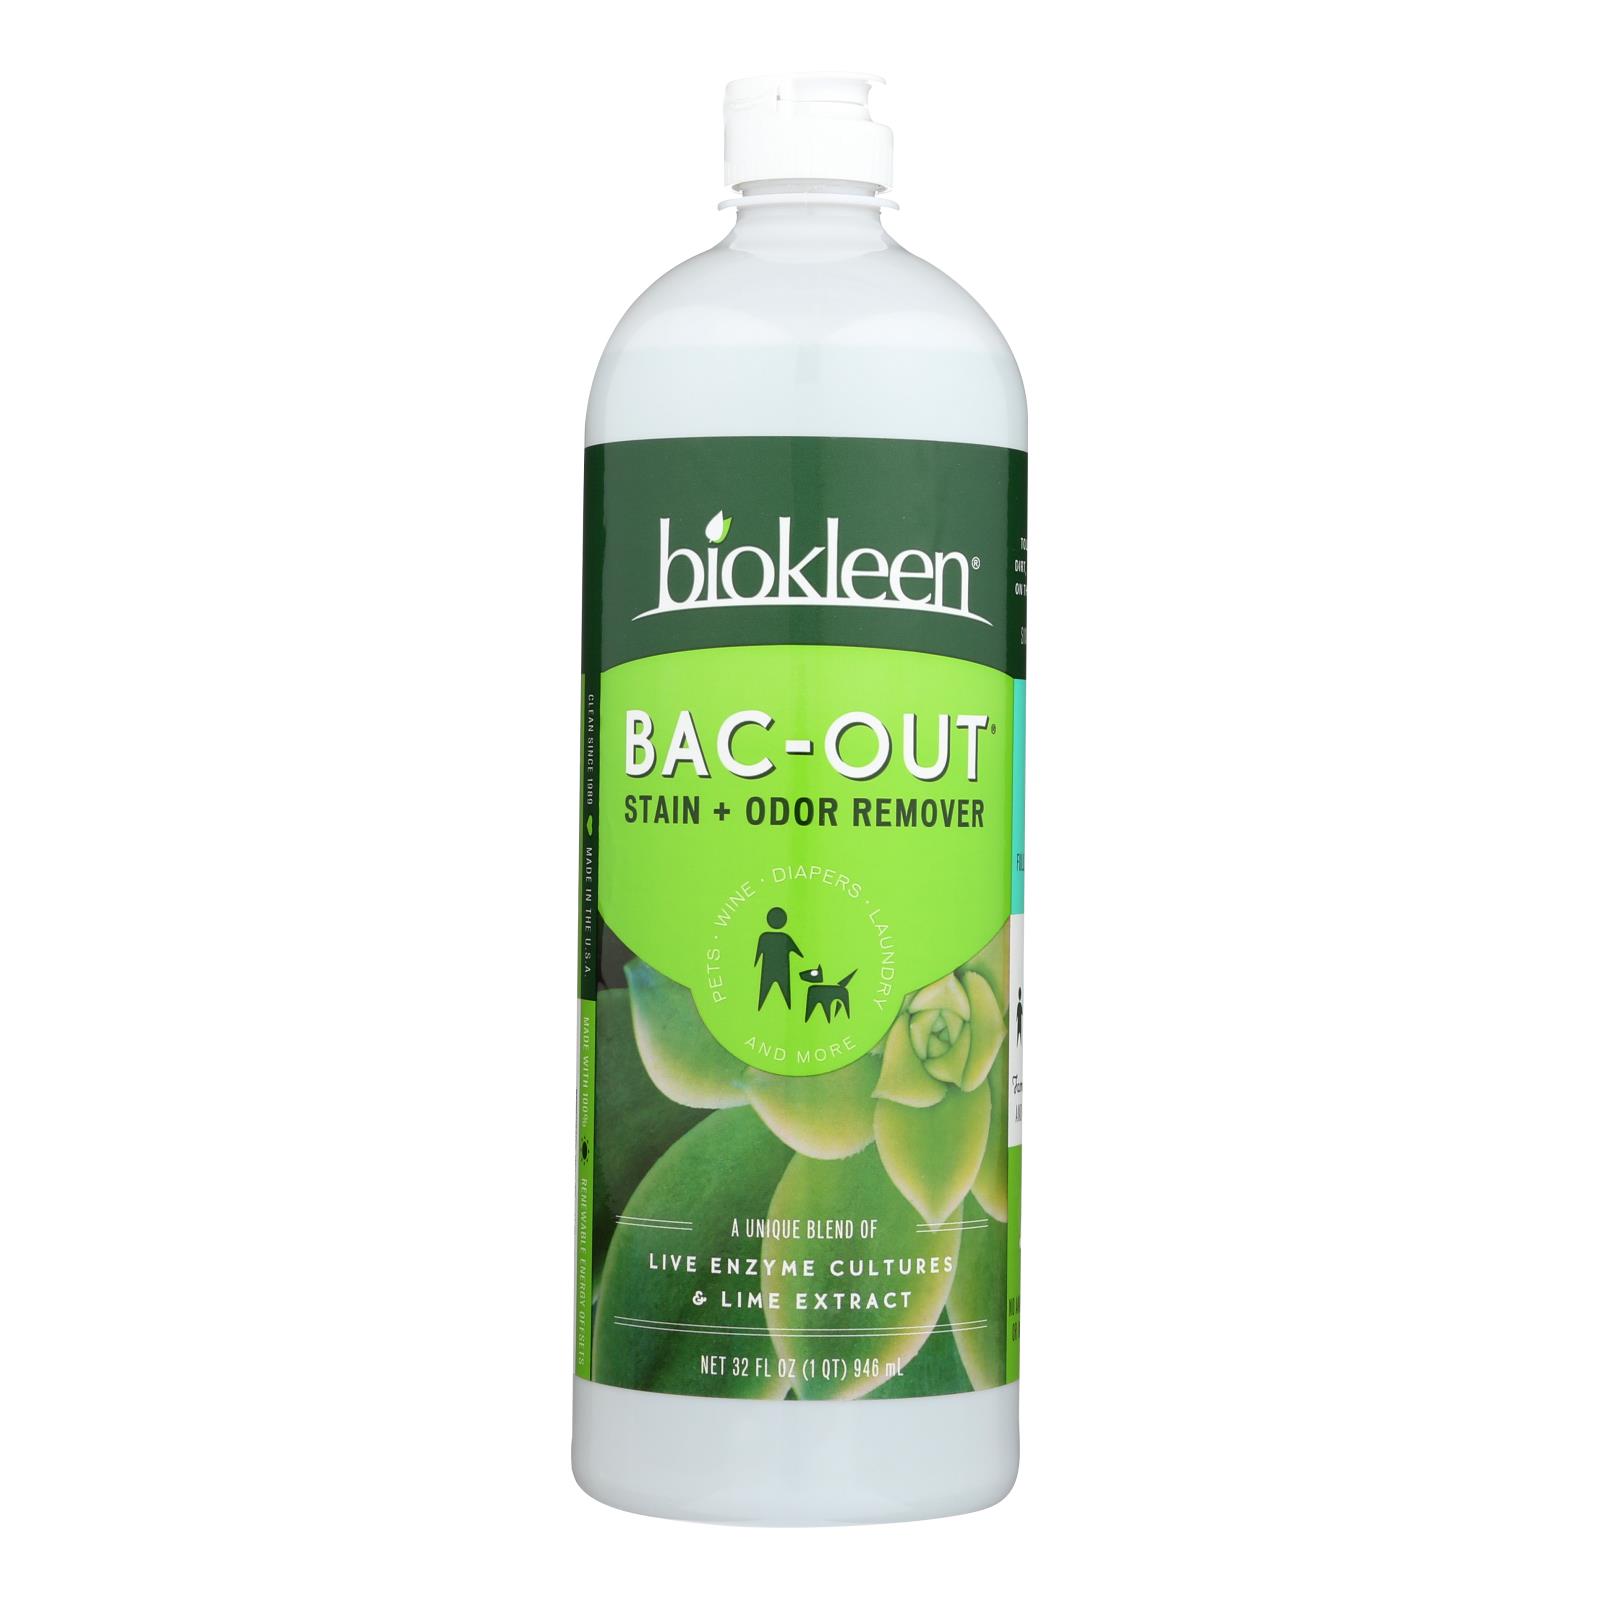 Biokleen - Stain+odor Rmvr Bac-out - 6개 묶음상품-32 FZ